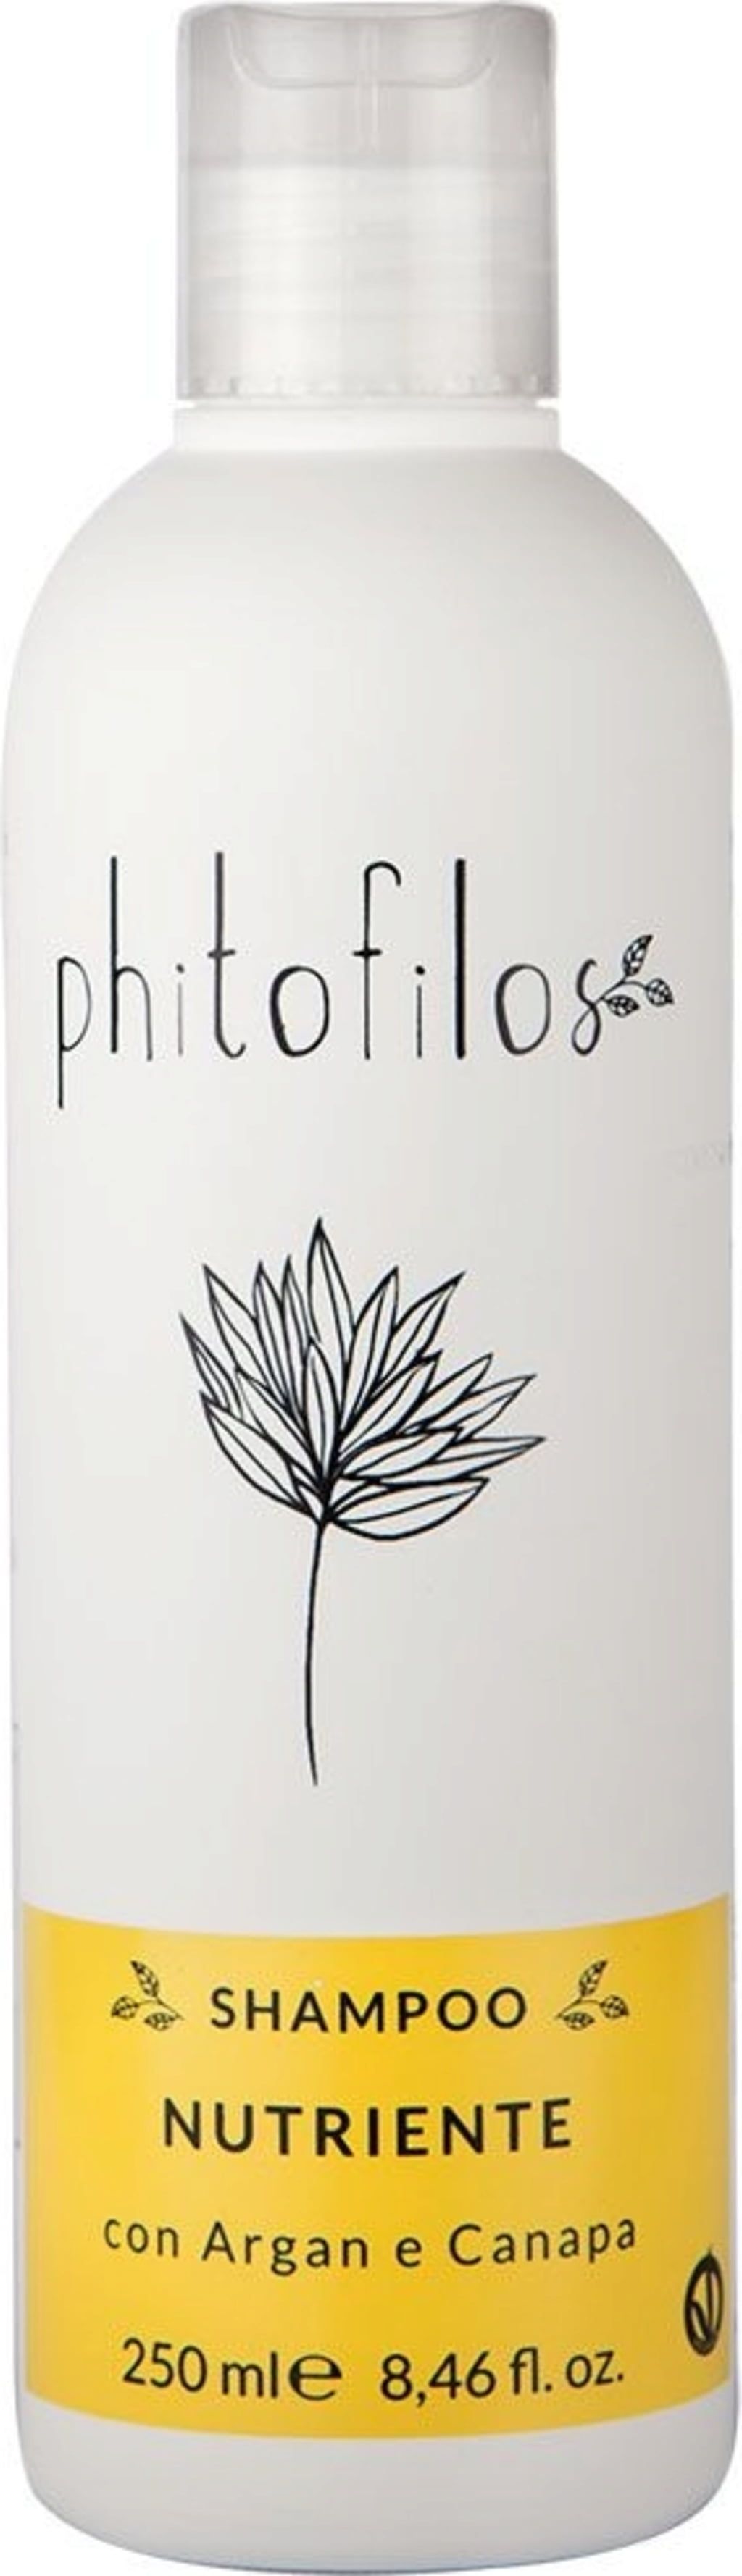 Phitofilos Sinergia hranjivi šampon - 250 ml